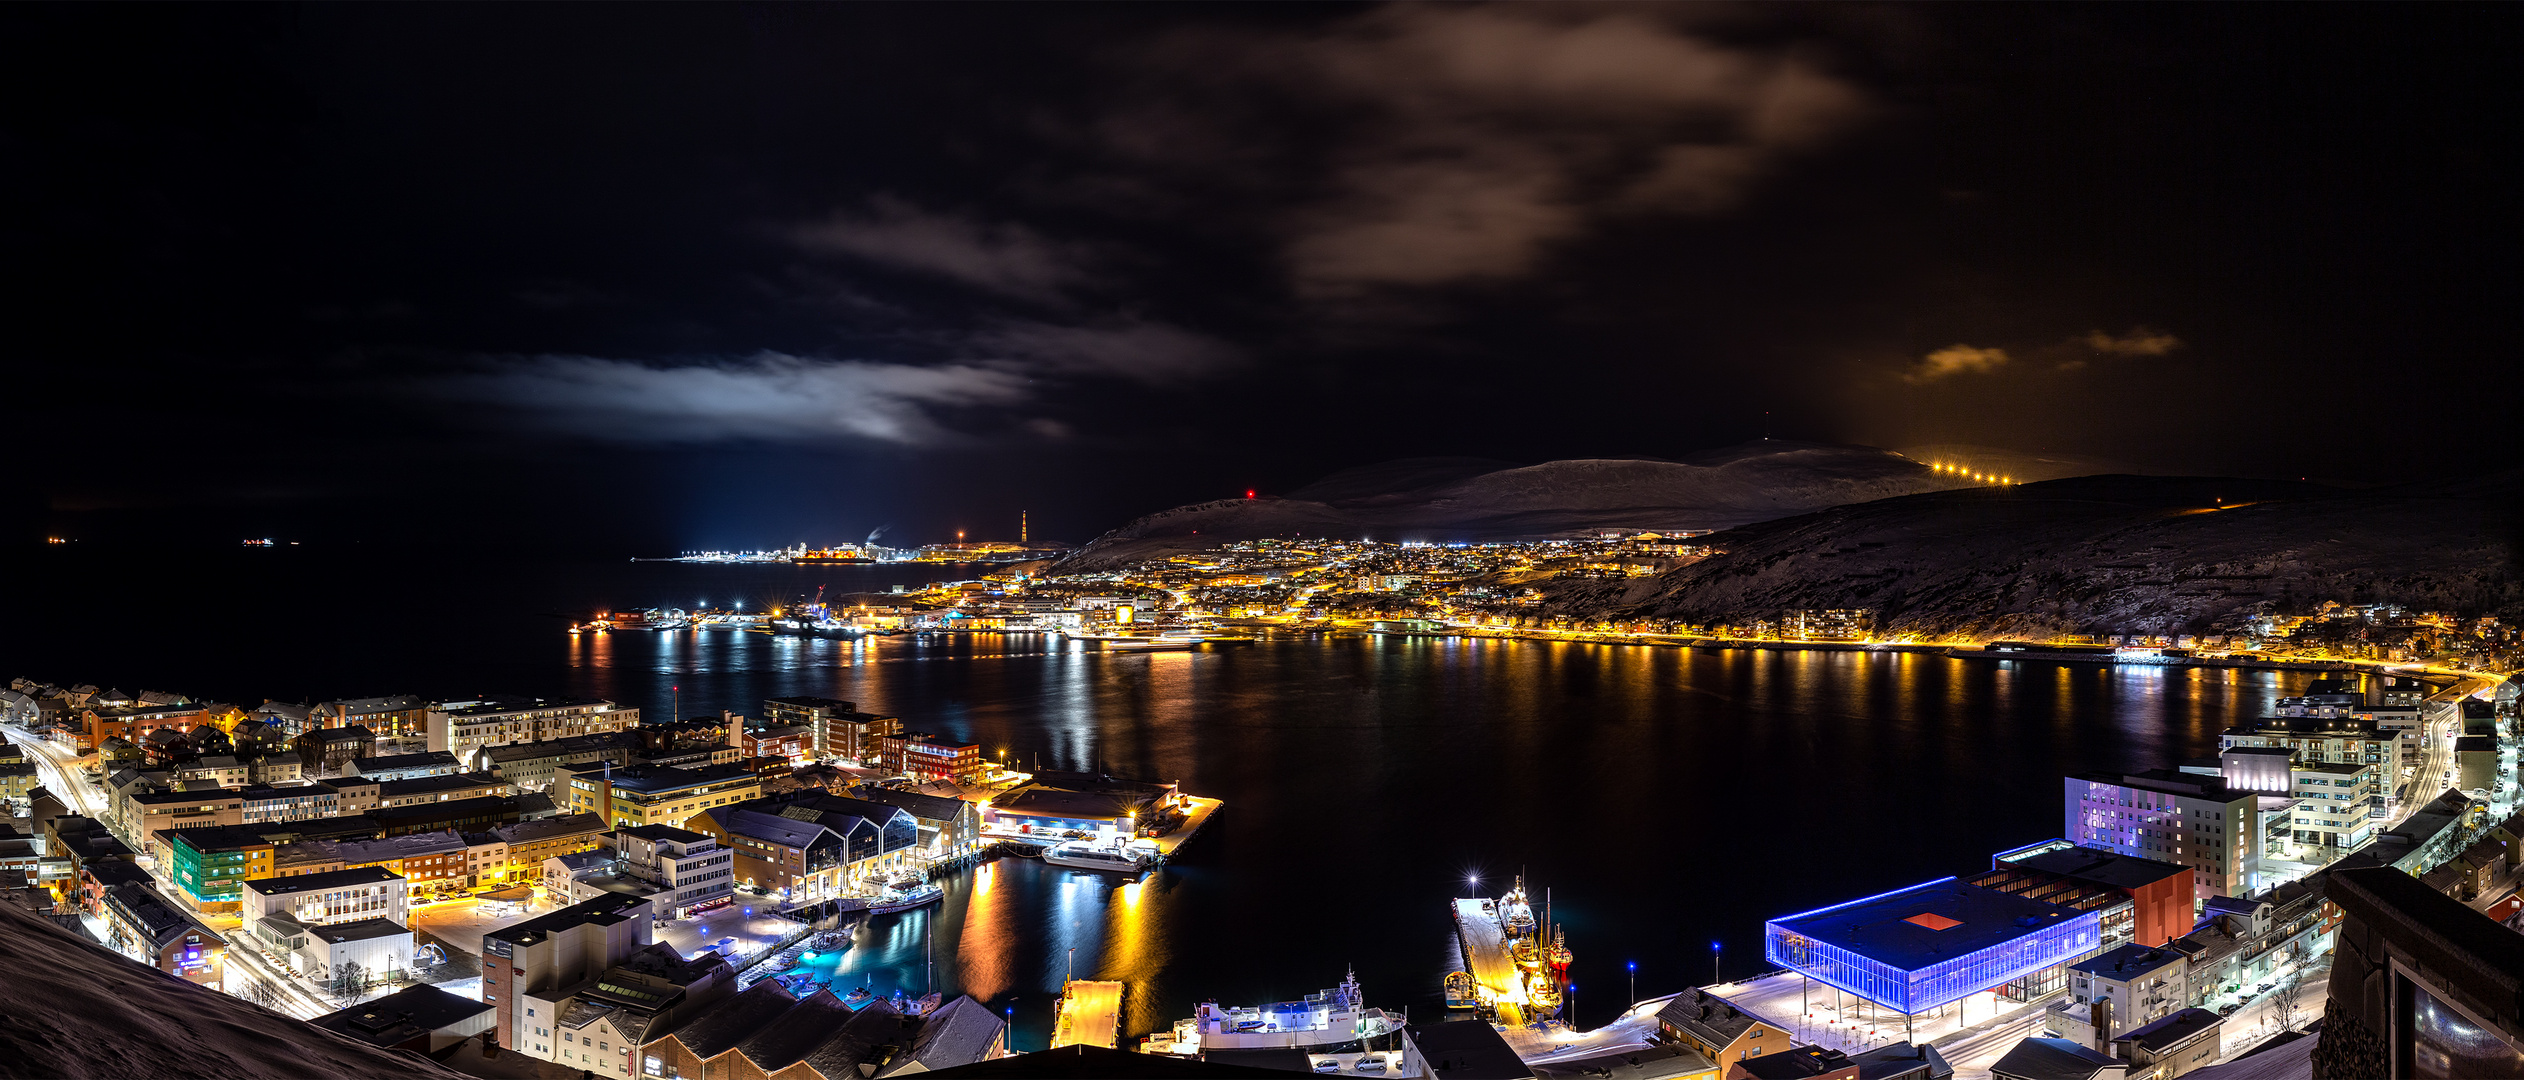 Hammerfest Midnight Panorama